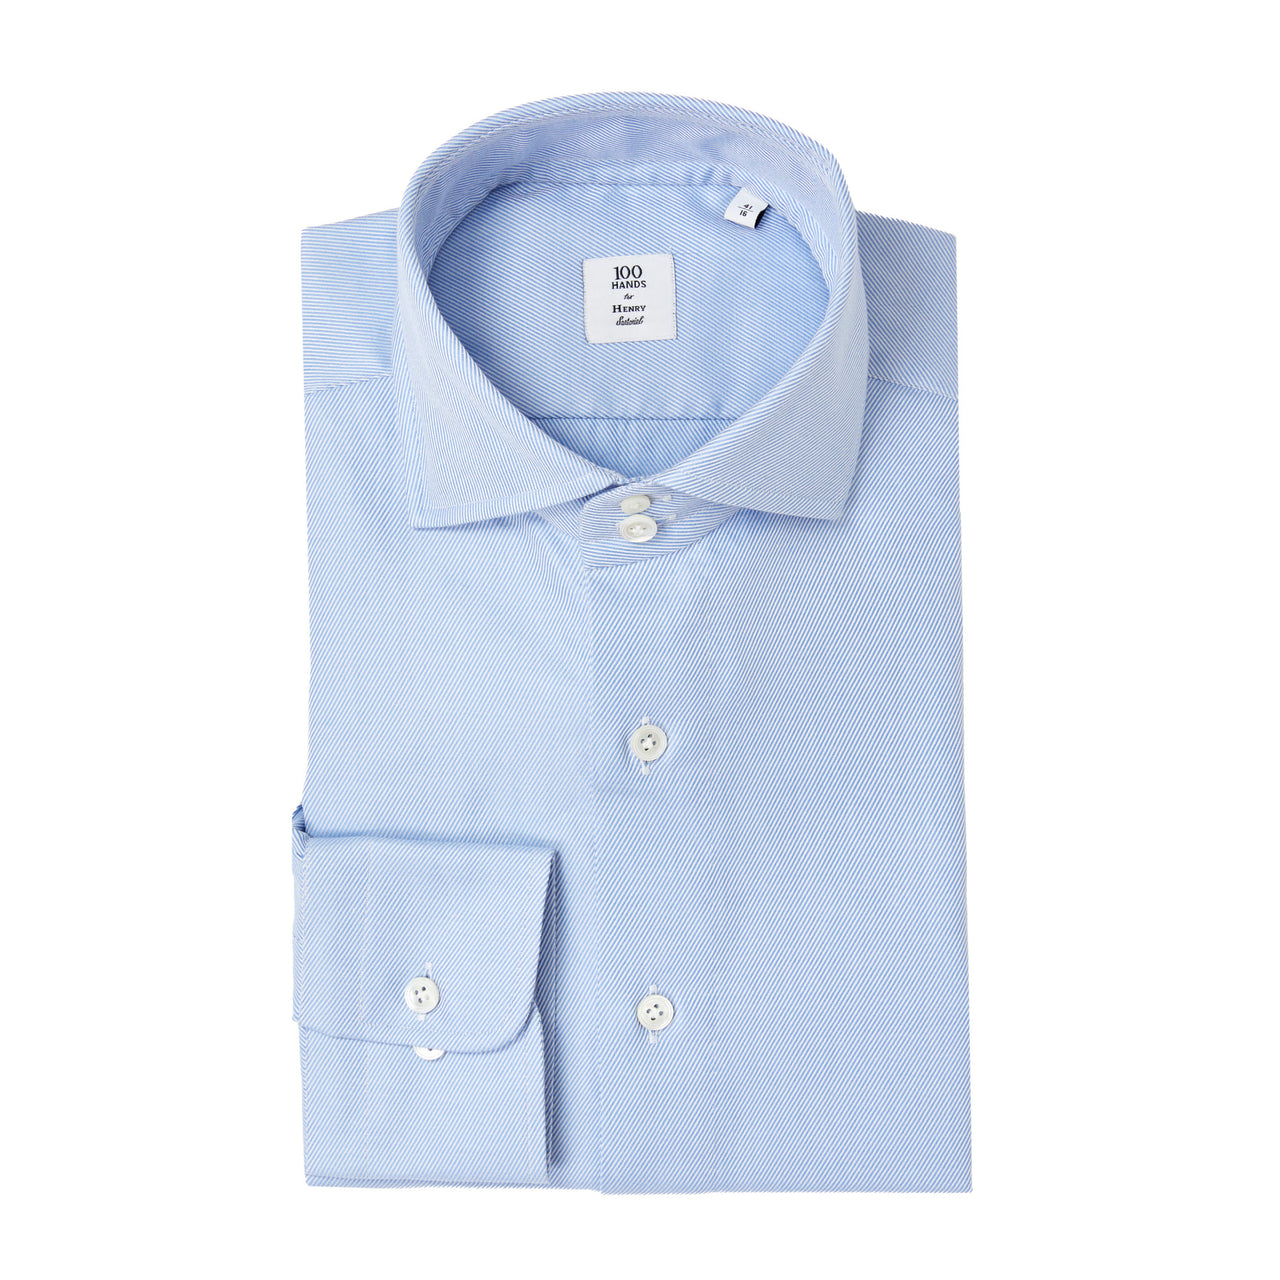 HENRY SARTORIAL X 100 HANDS Stripe Shirt BLUE/WHITE